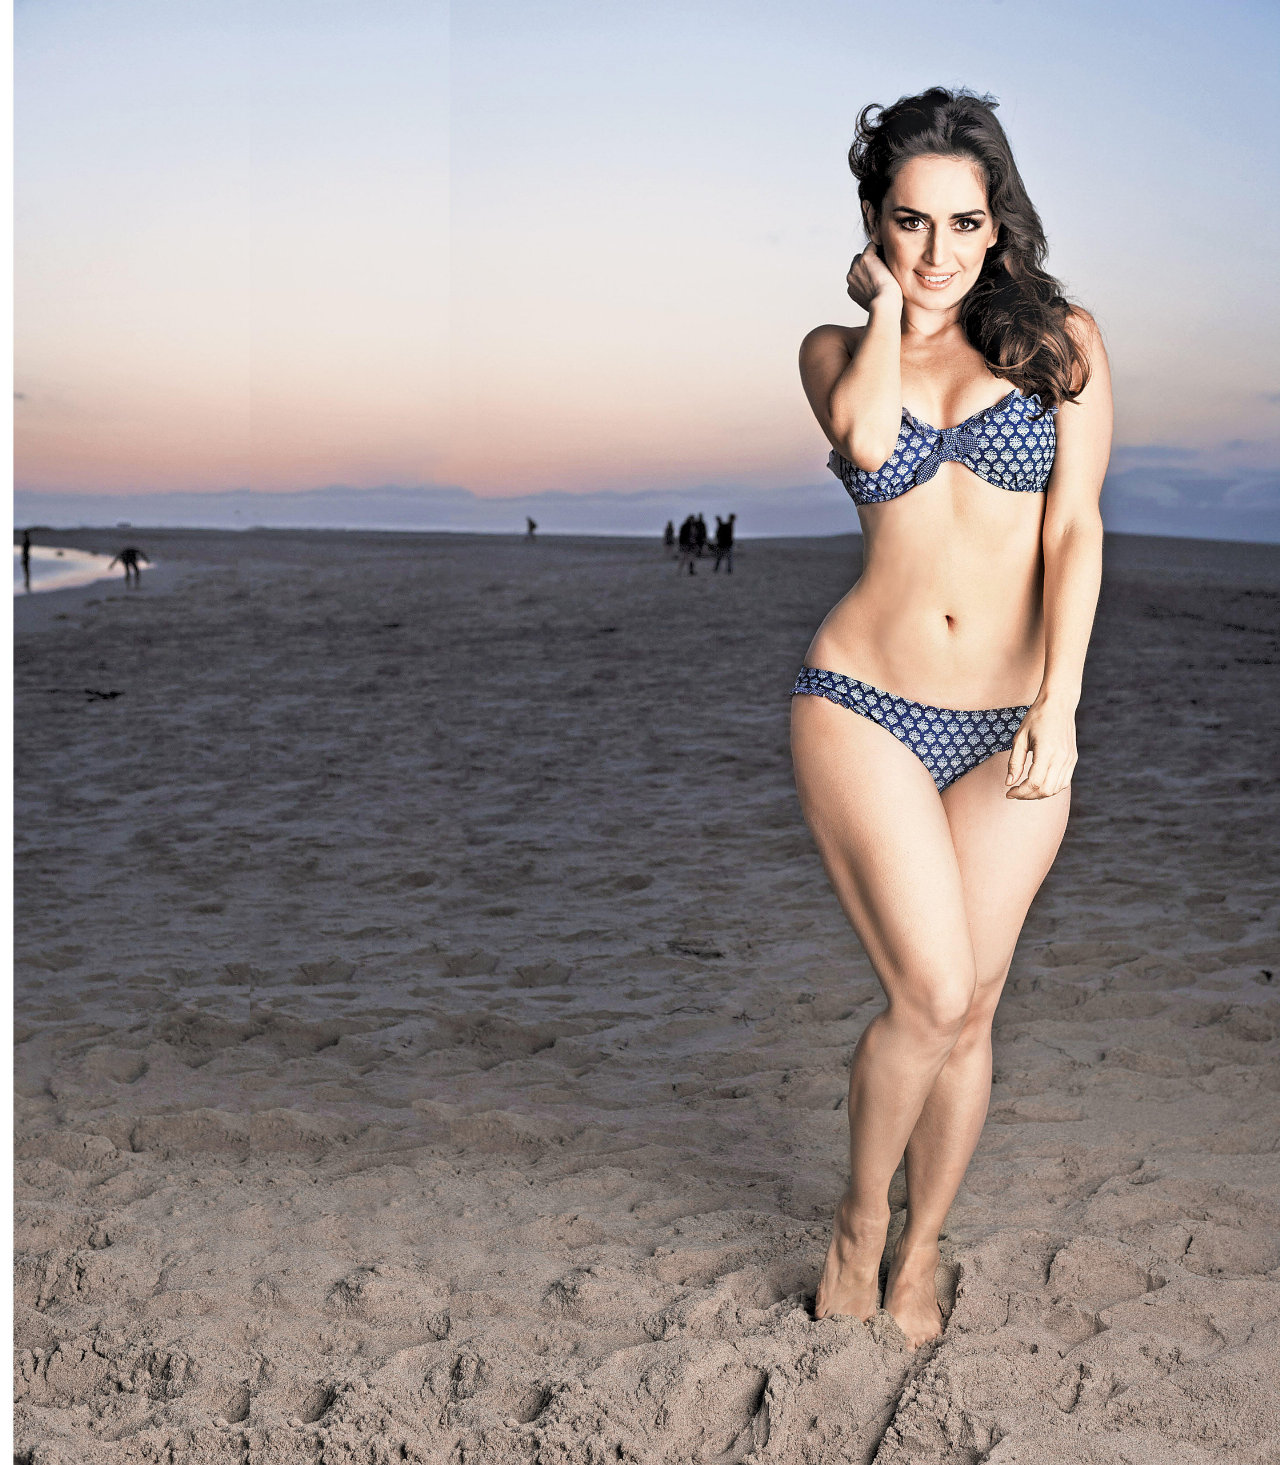 Mexican Actress Ana de la Reguera in Bikini.